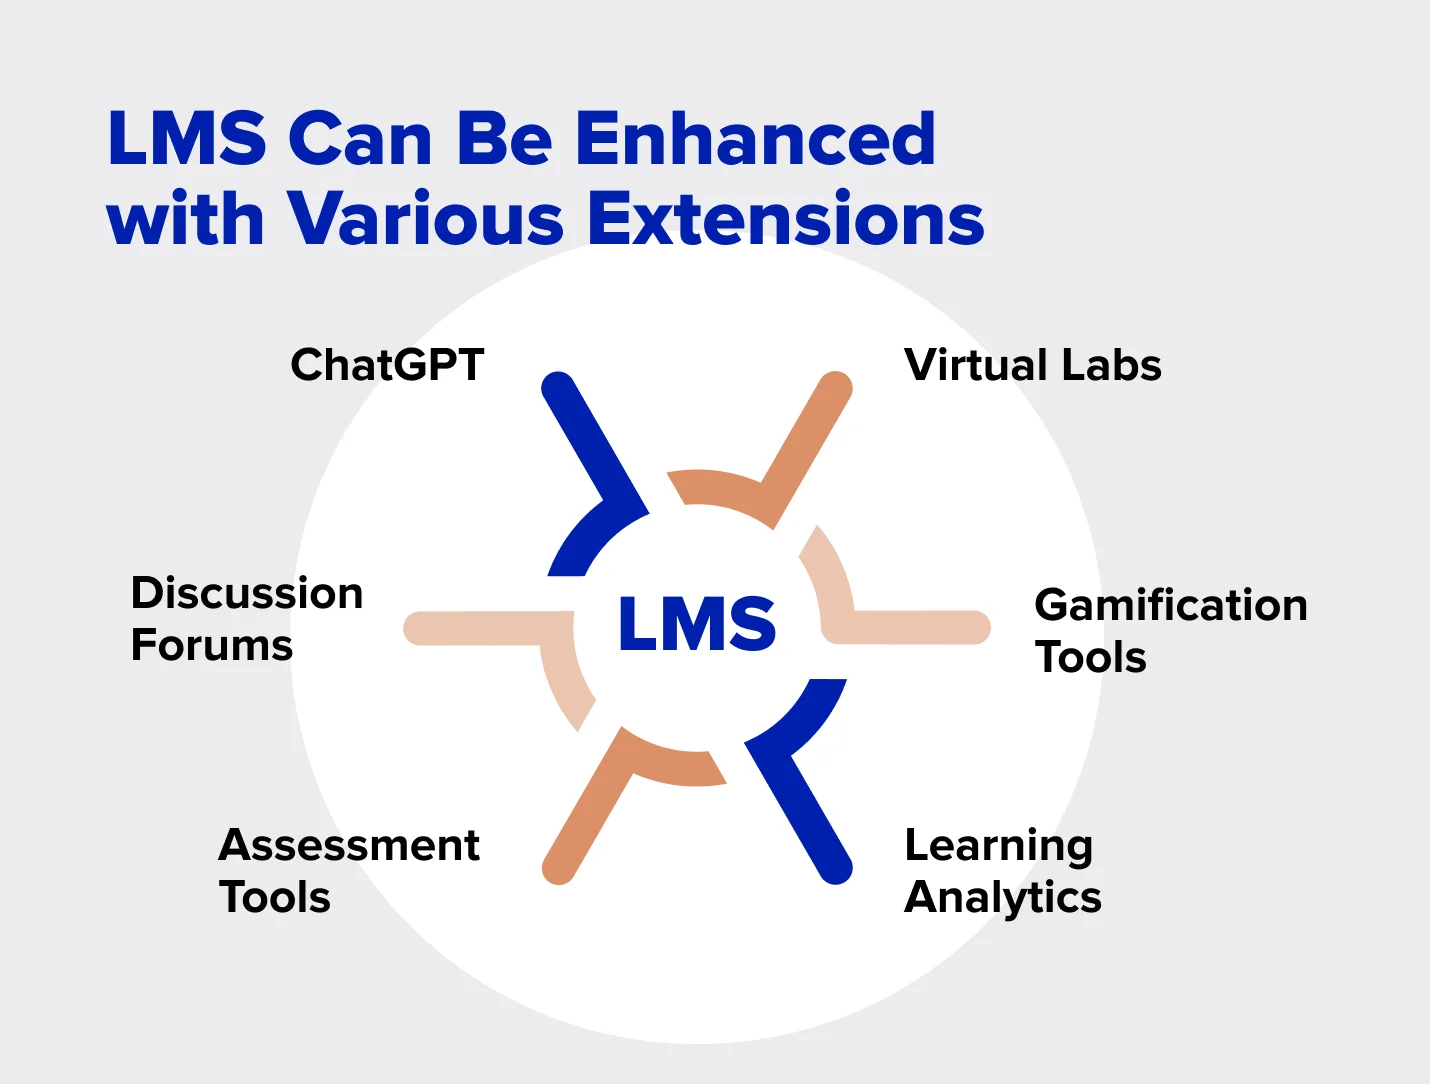 Does a suitable LMS enhance content delivery?